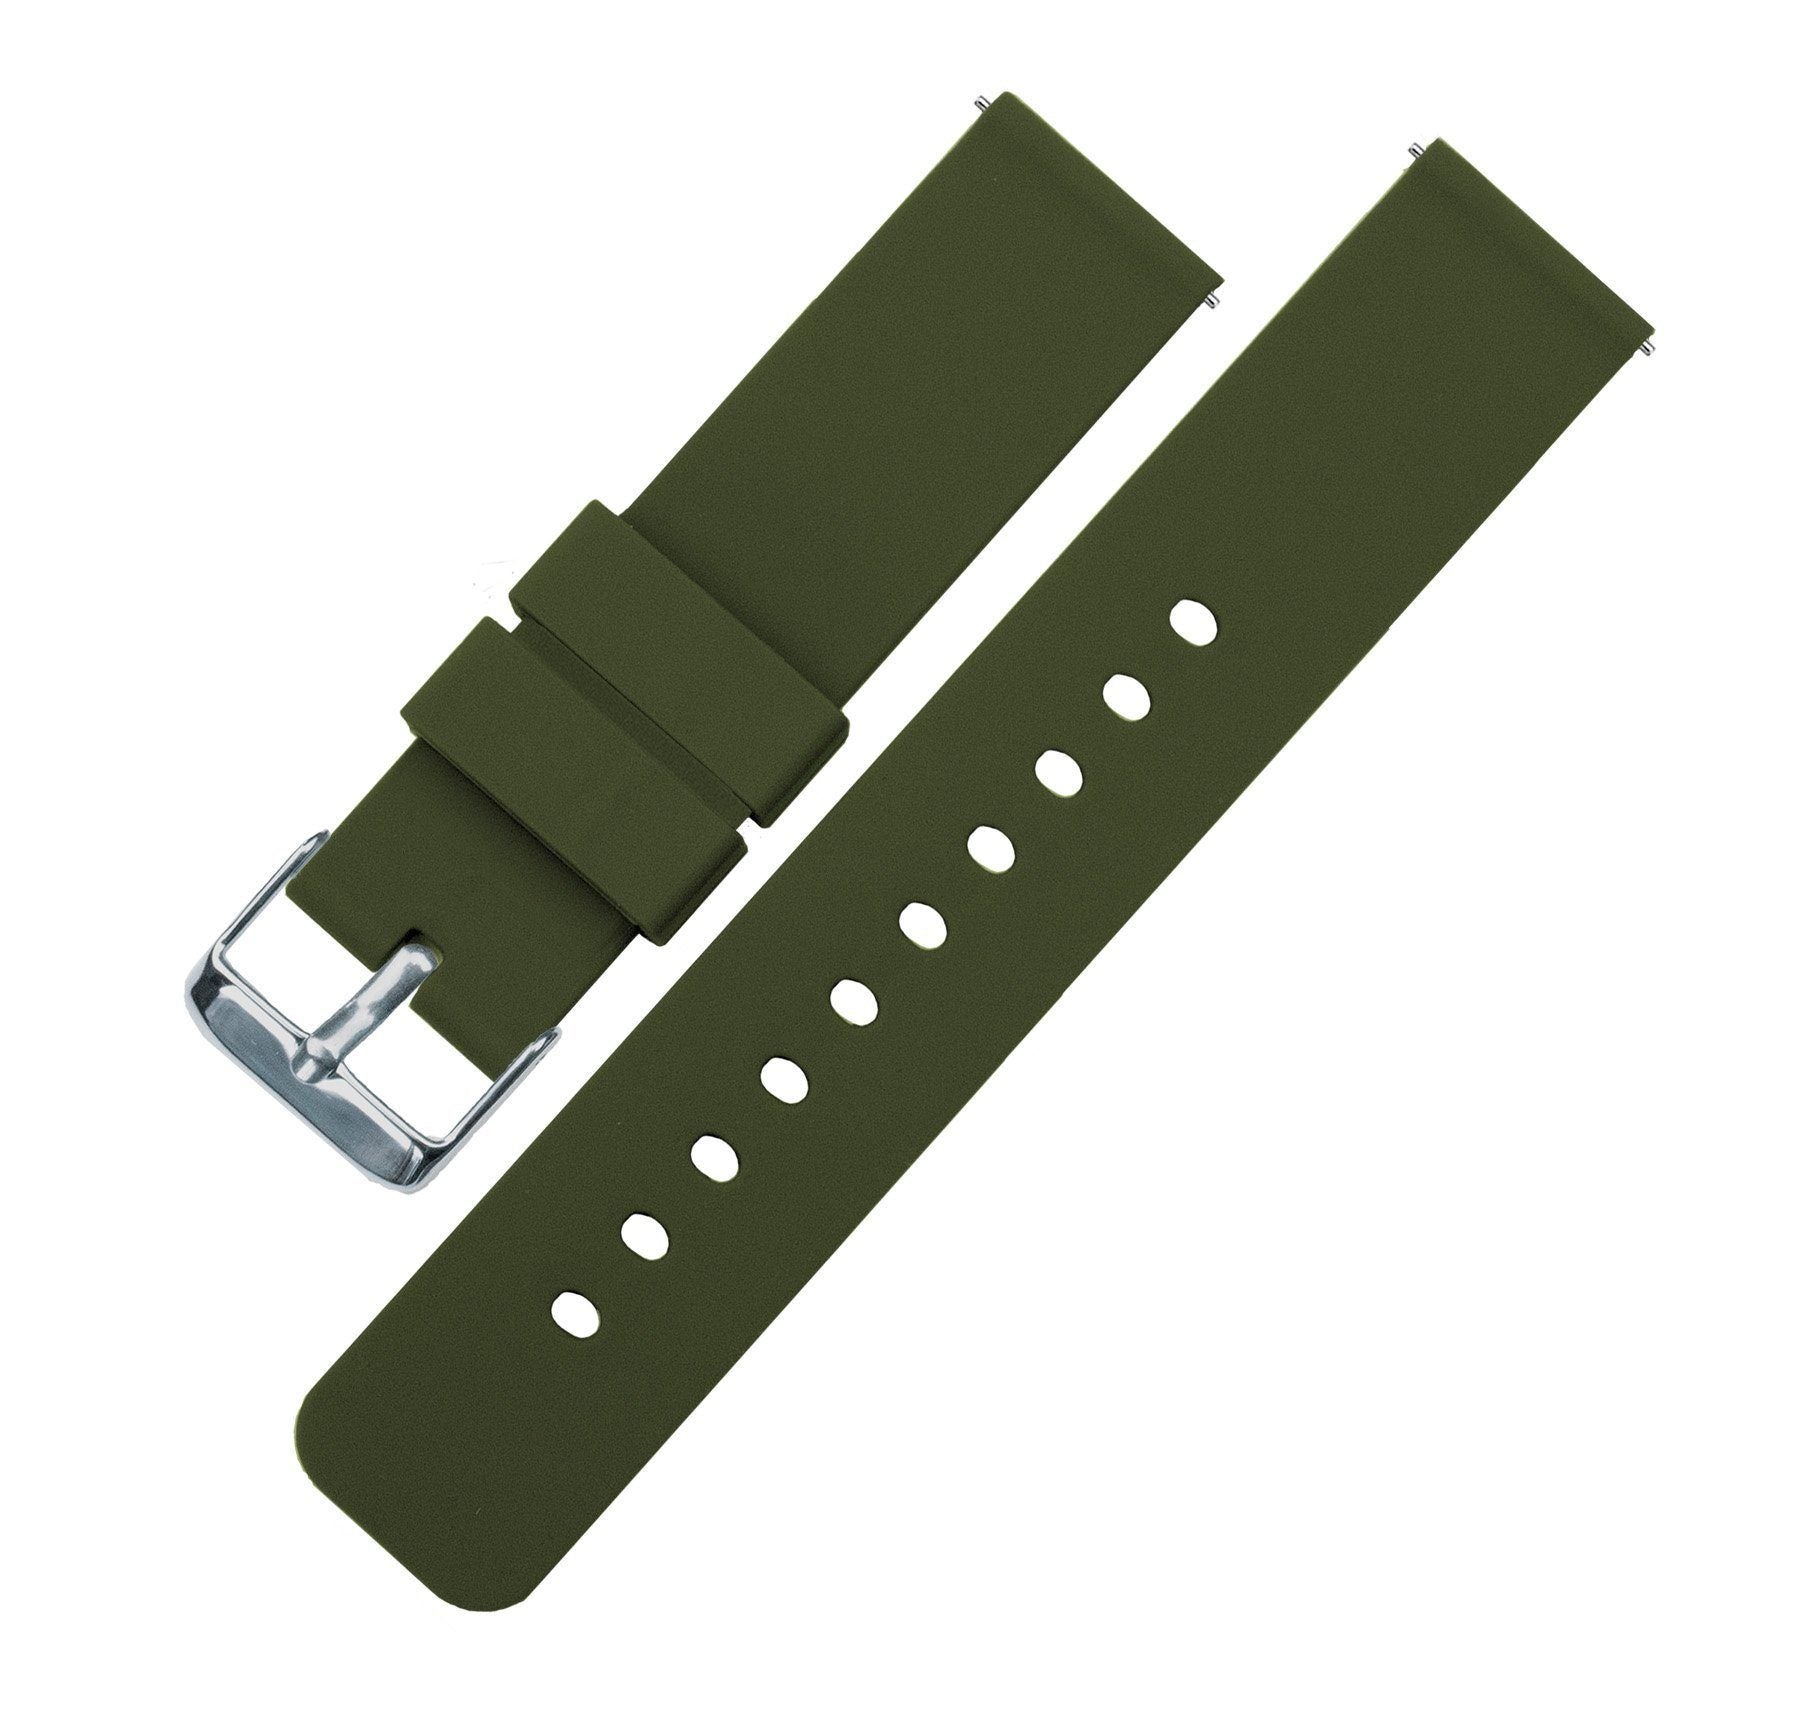 Samsung Galaxy Watch Active |  Silicone | Army Green - Barton Watch Bands